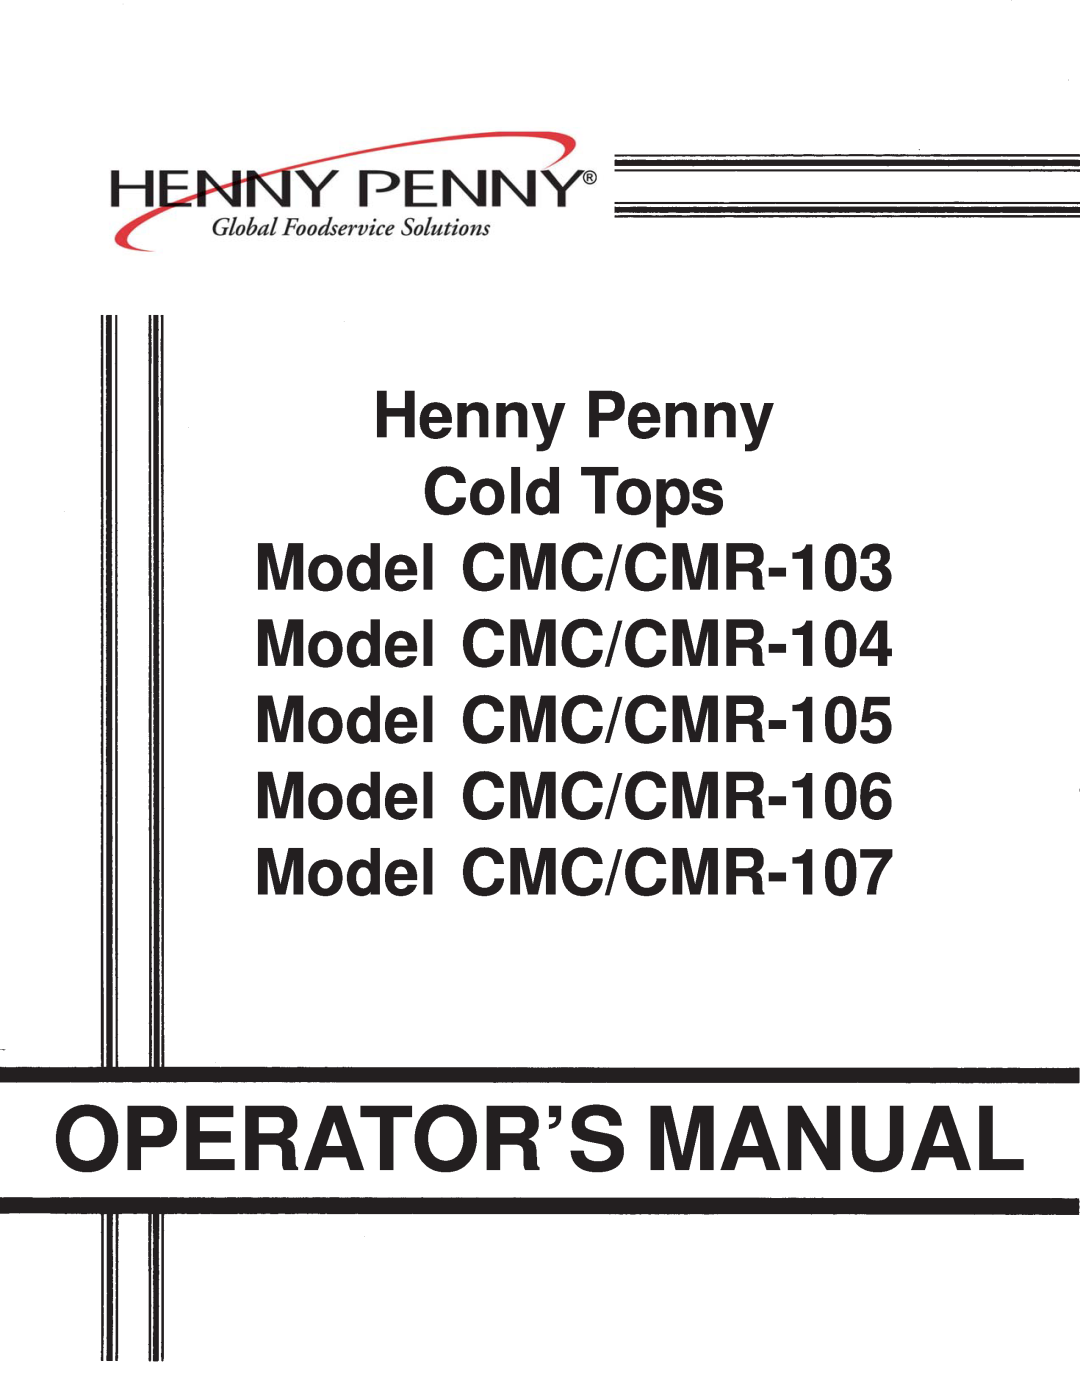 Henny Penny CMC/CMR-105, CMC/CMR-106 manual Operator’S Manual, Henny Penny Cold Tops Model CMC/CMR-103 Model CMC/CMR-104 